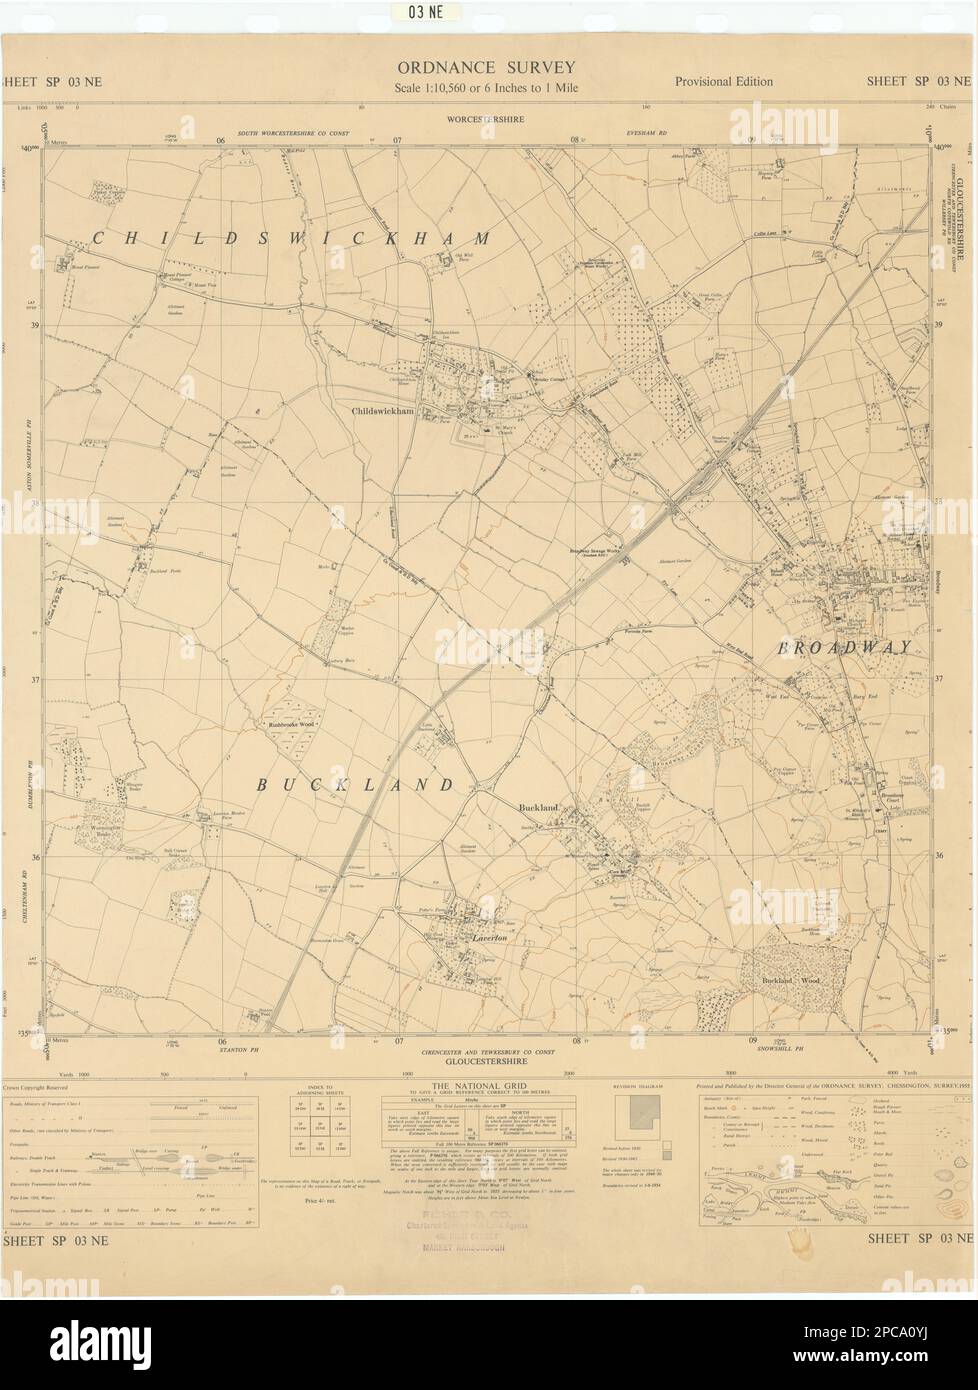 Ordnance Survey SP03NE Cotswolds Broadway Childswickham Buckland 1955 mapa Foto de stock